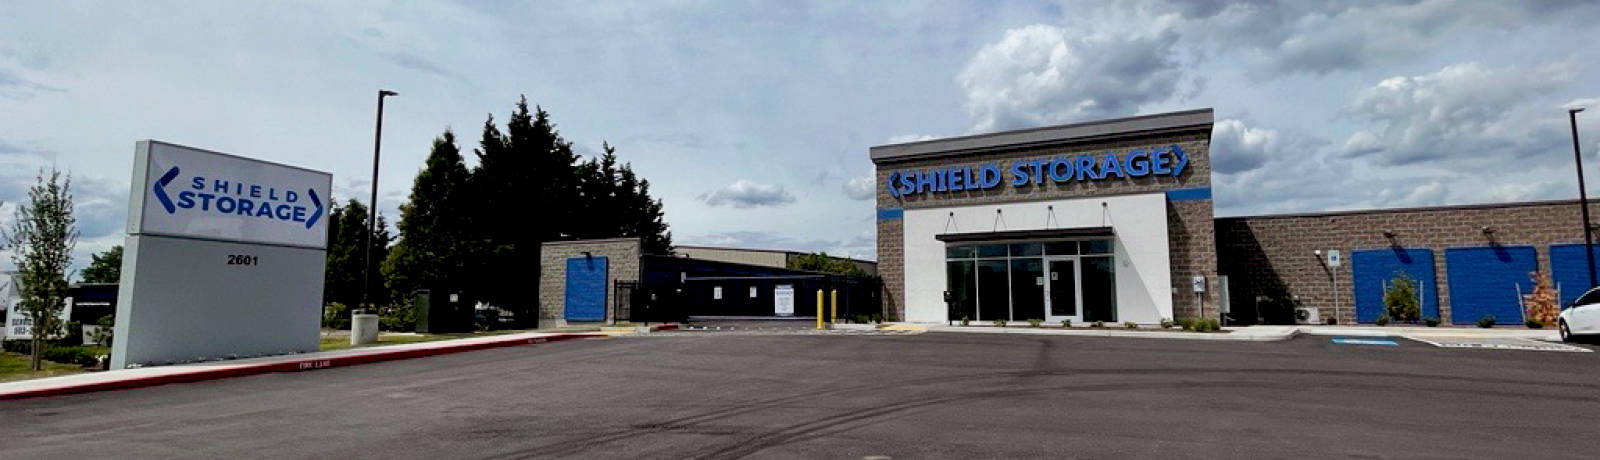 Shield Storage Buildings A&B